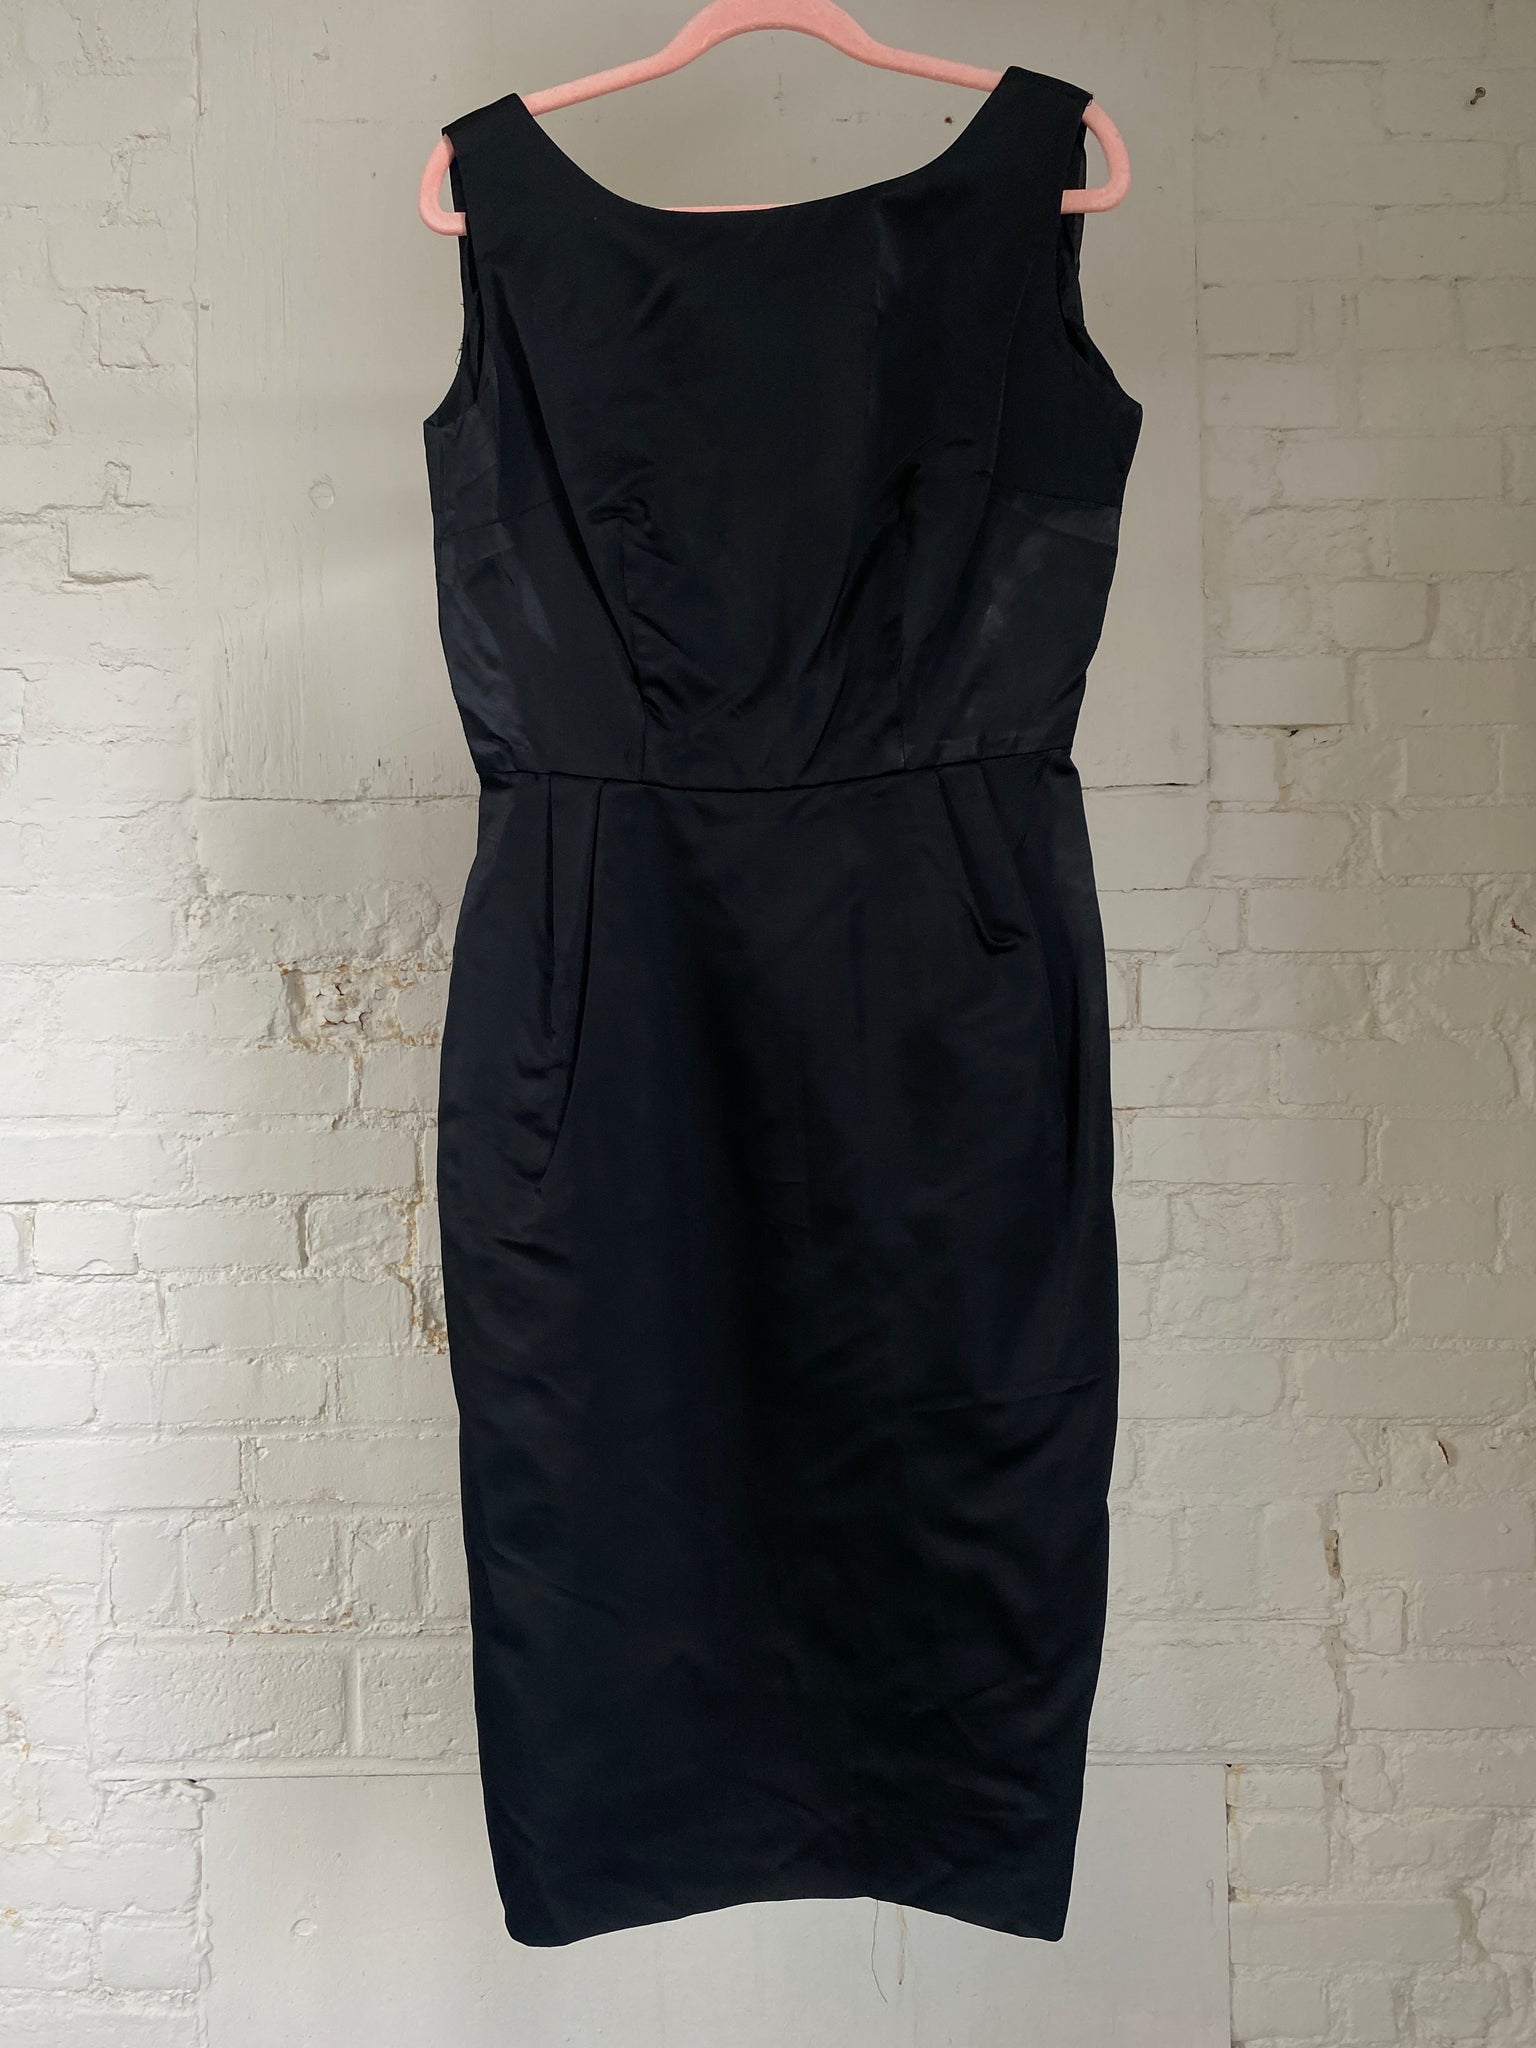 Vintage Black Silky Bodycon Evening Dress (S/M)